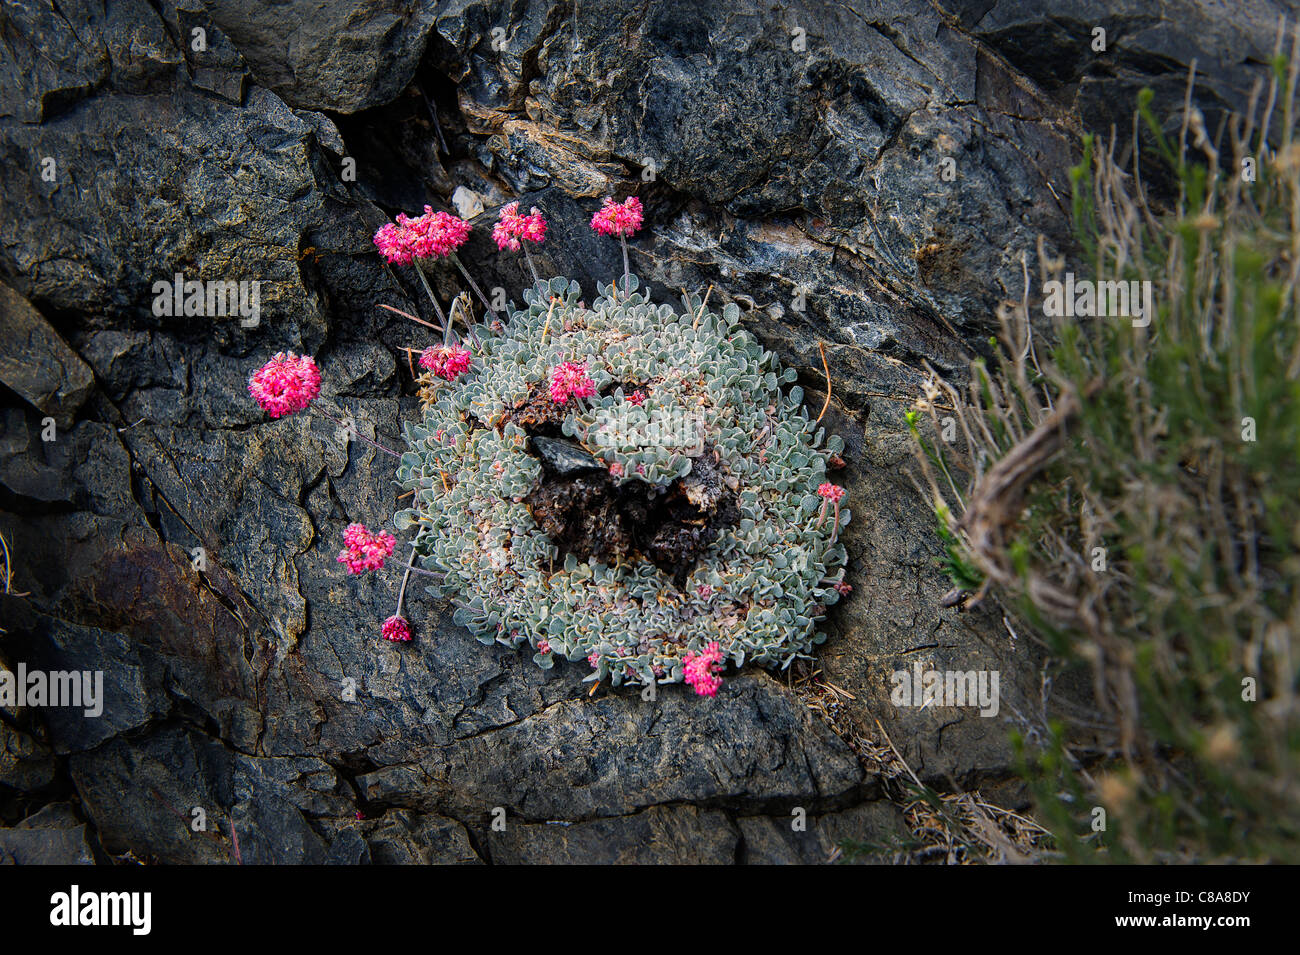 Eriogonum ovalifolium (cuscino) di farina di grano saraceno, Poligonacee, in habitat rocciosi; Sierra Nevada, in California, U.S.A. Foto Stock